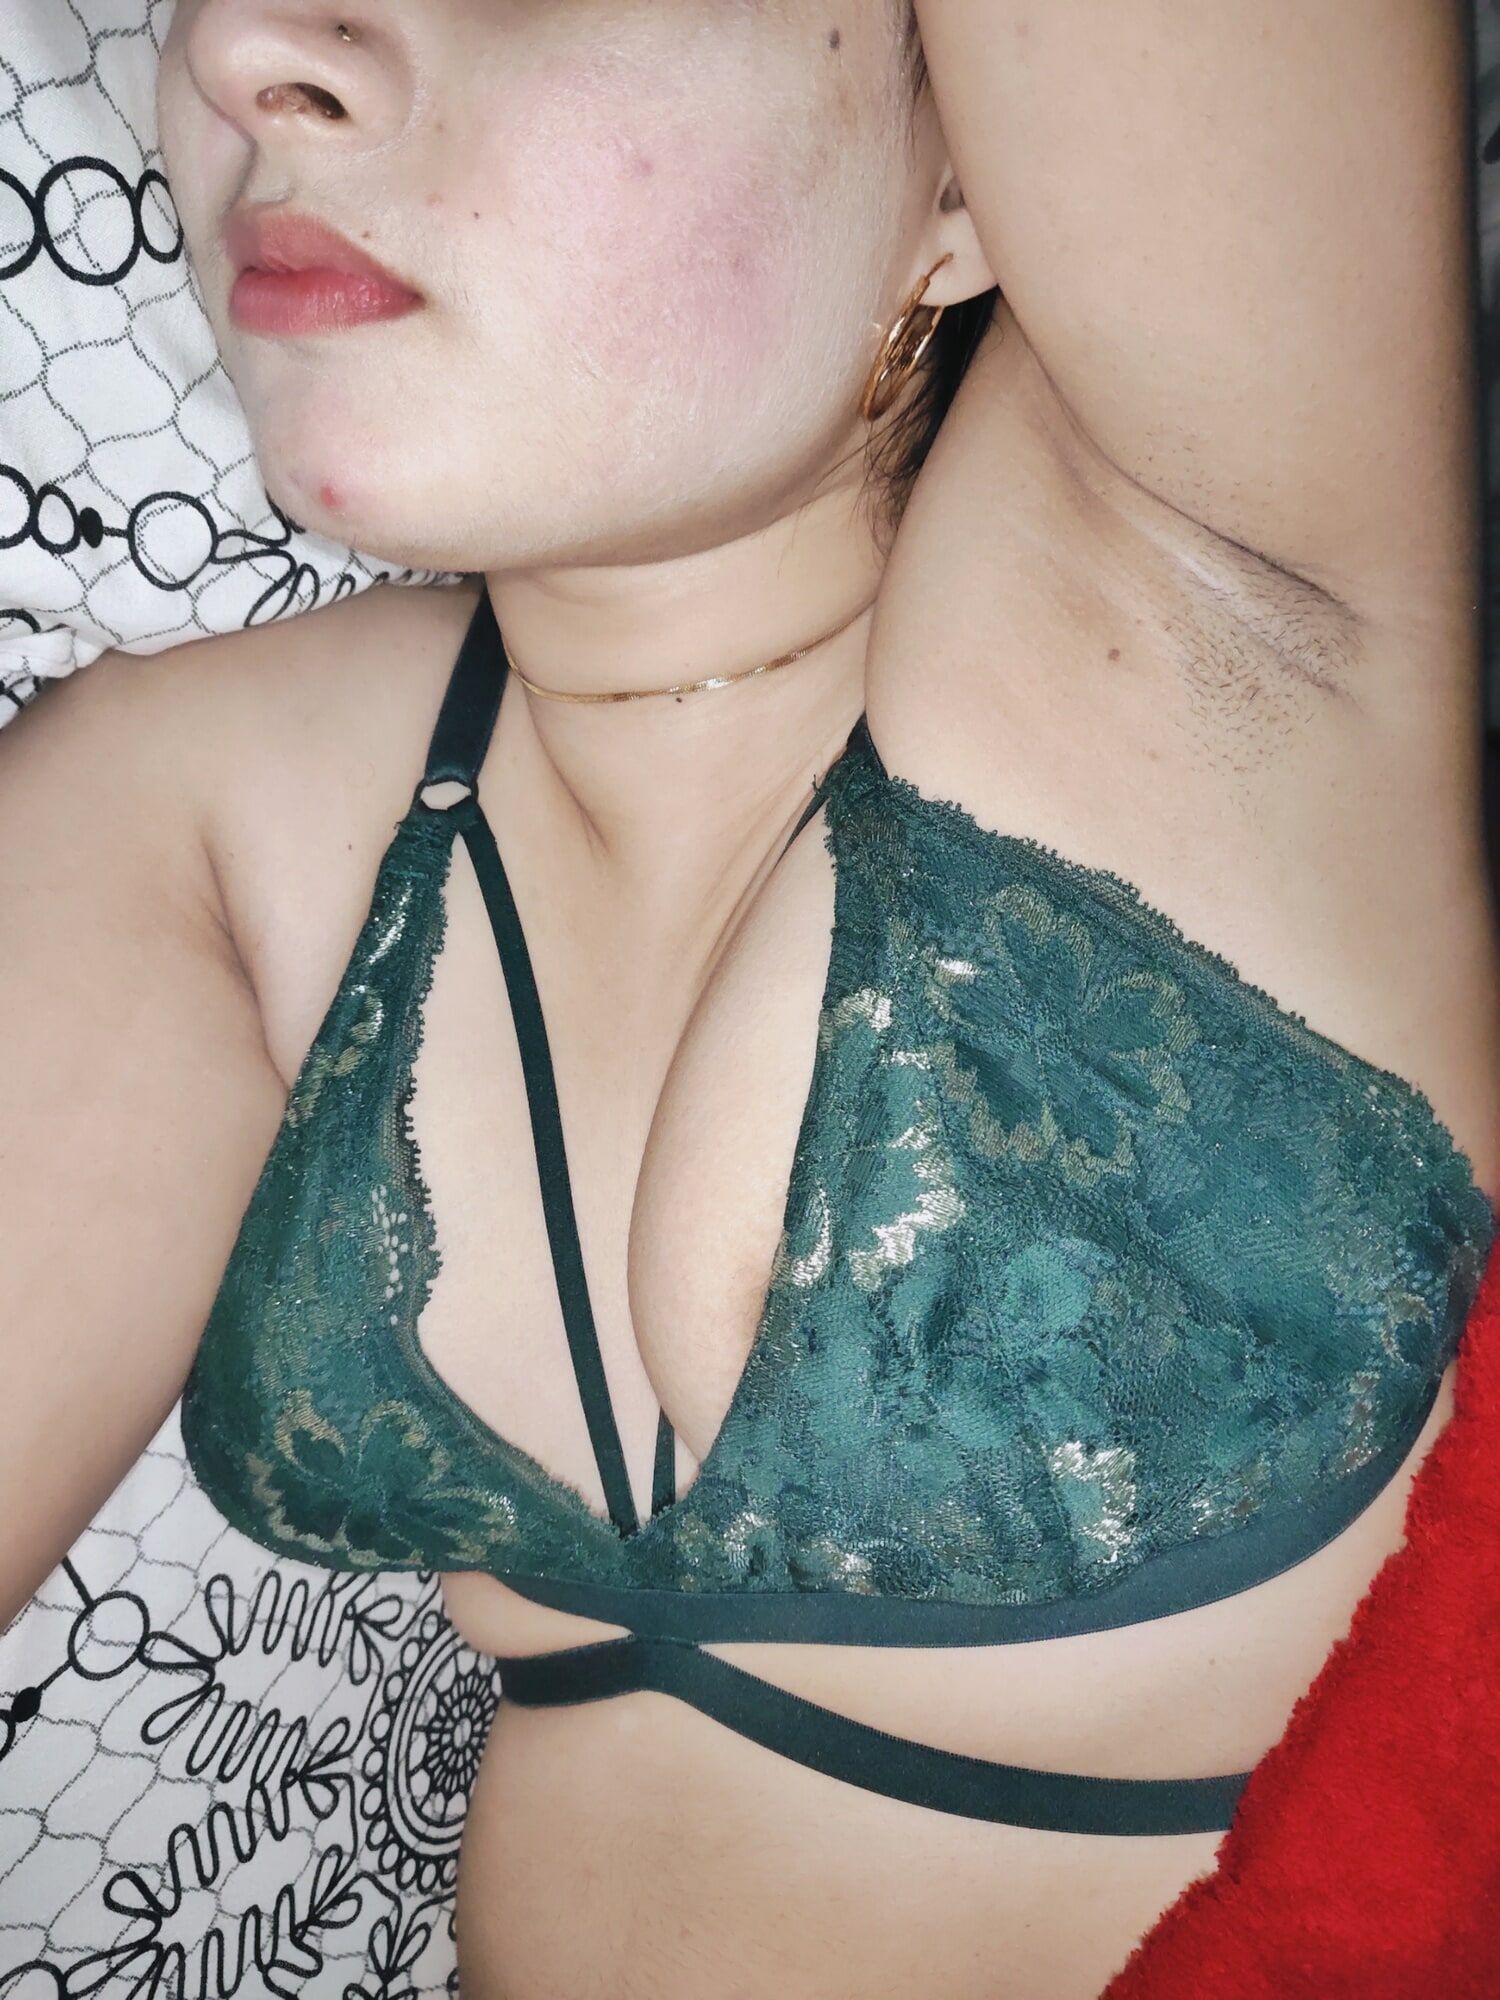 My Armpits in green bra #7